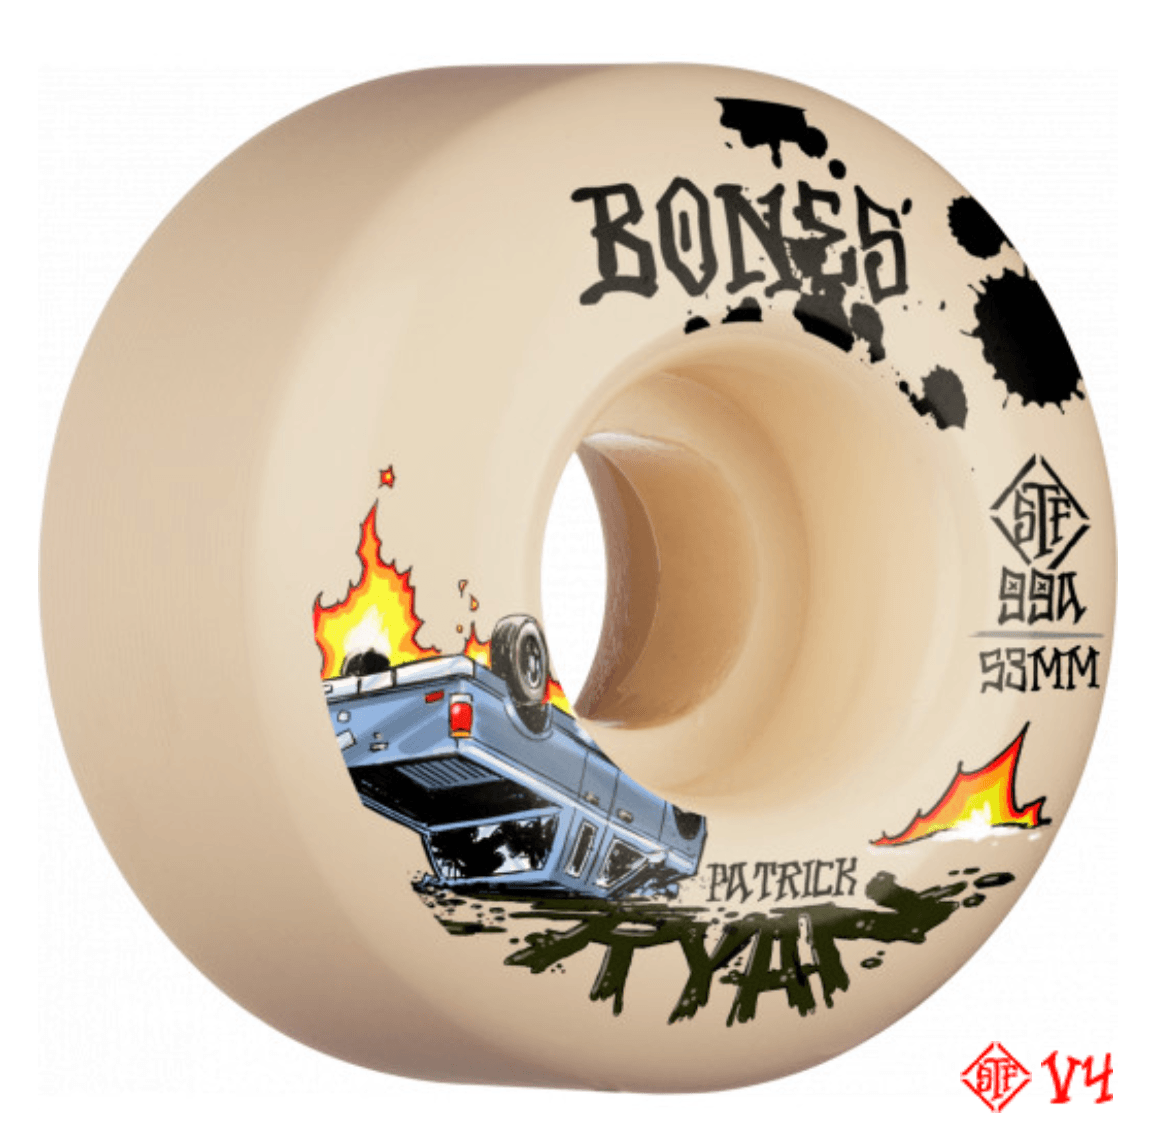 Bones: Pro Ryan Crash and Burn STF 99a Skateboard Wheels - Motion Boardshop